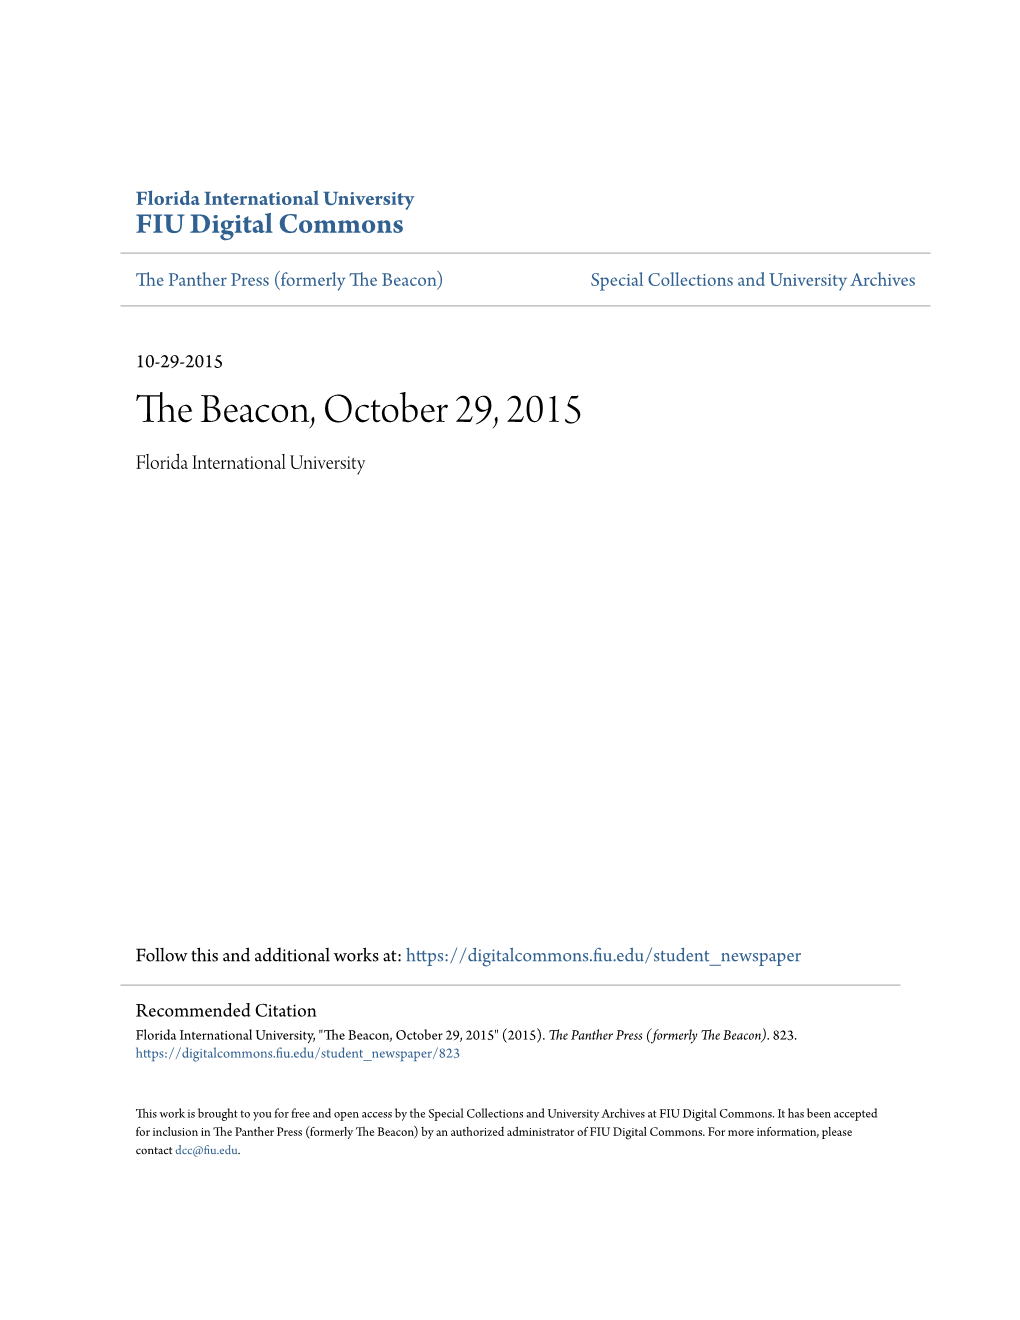 The Beacon, October 29, 2015 Florida International University